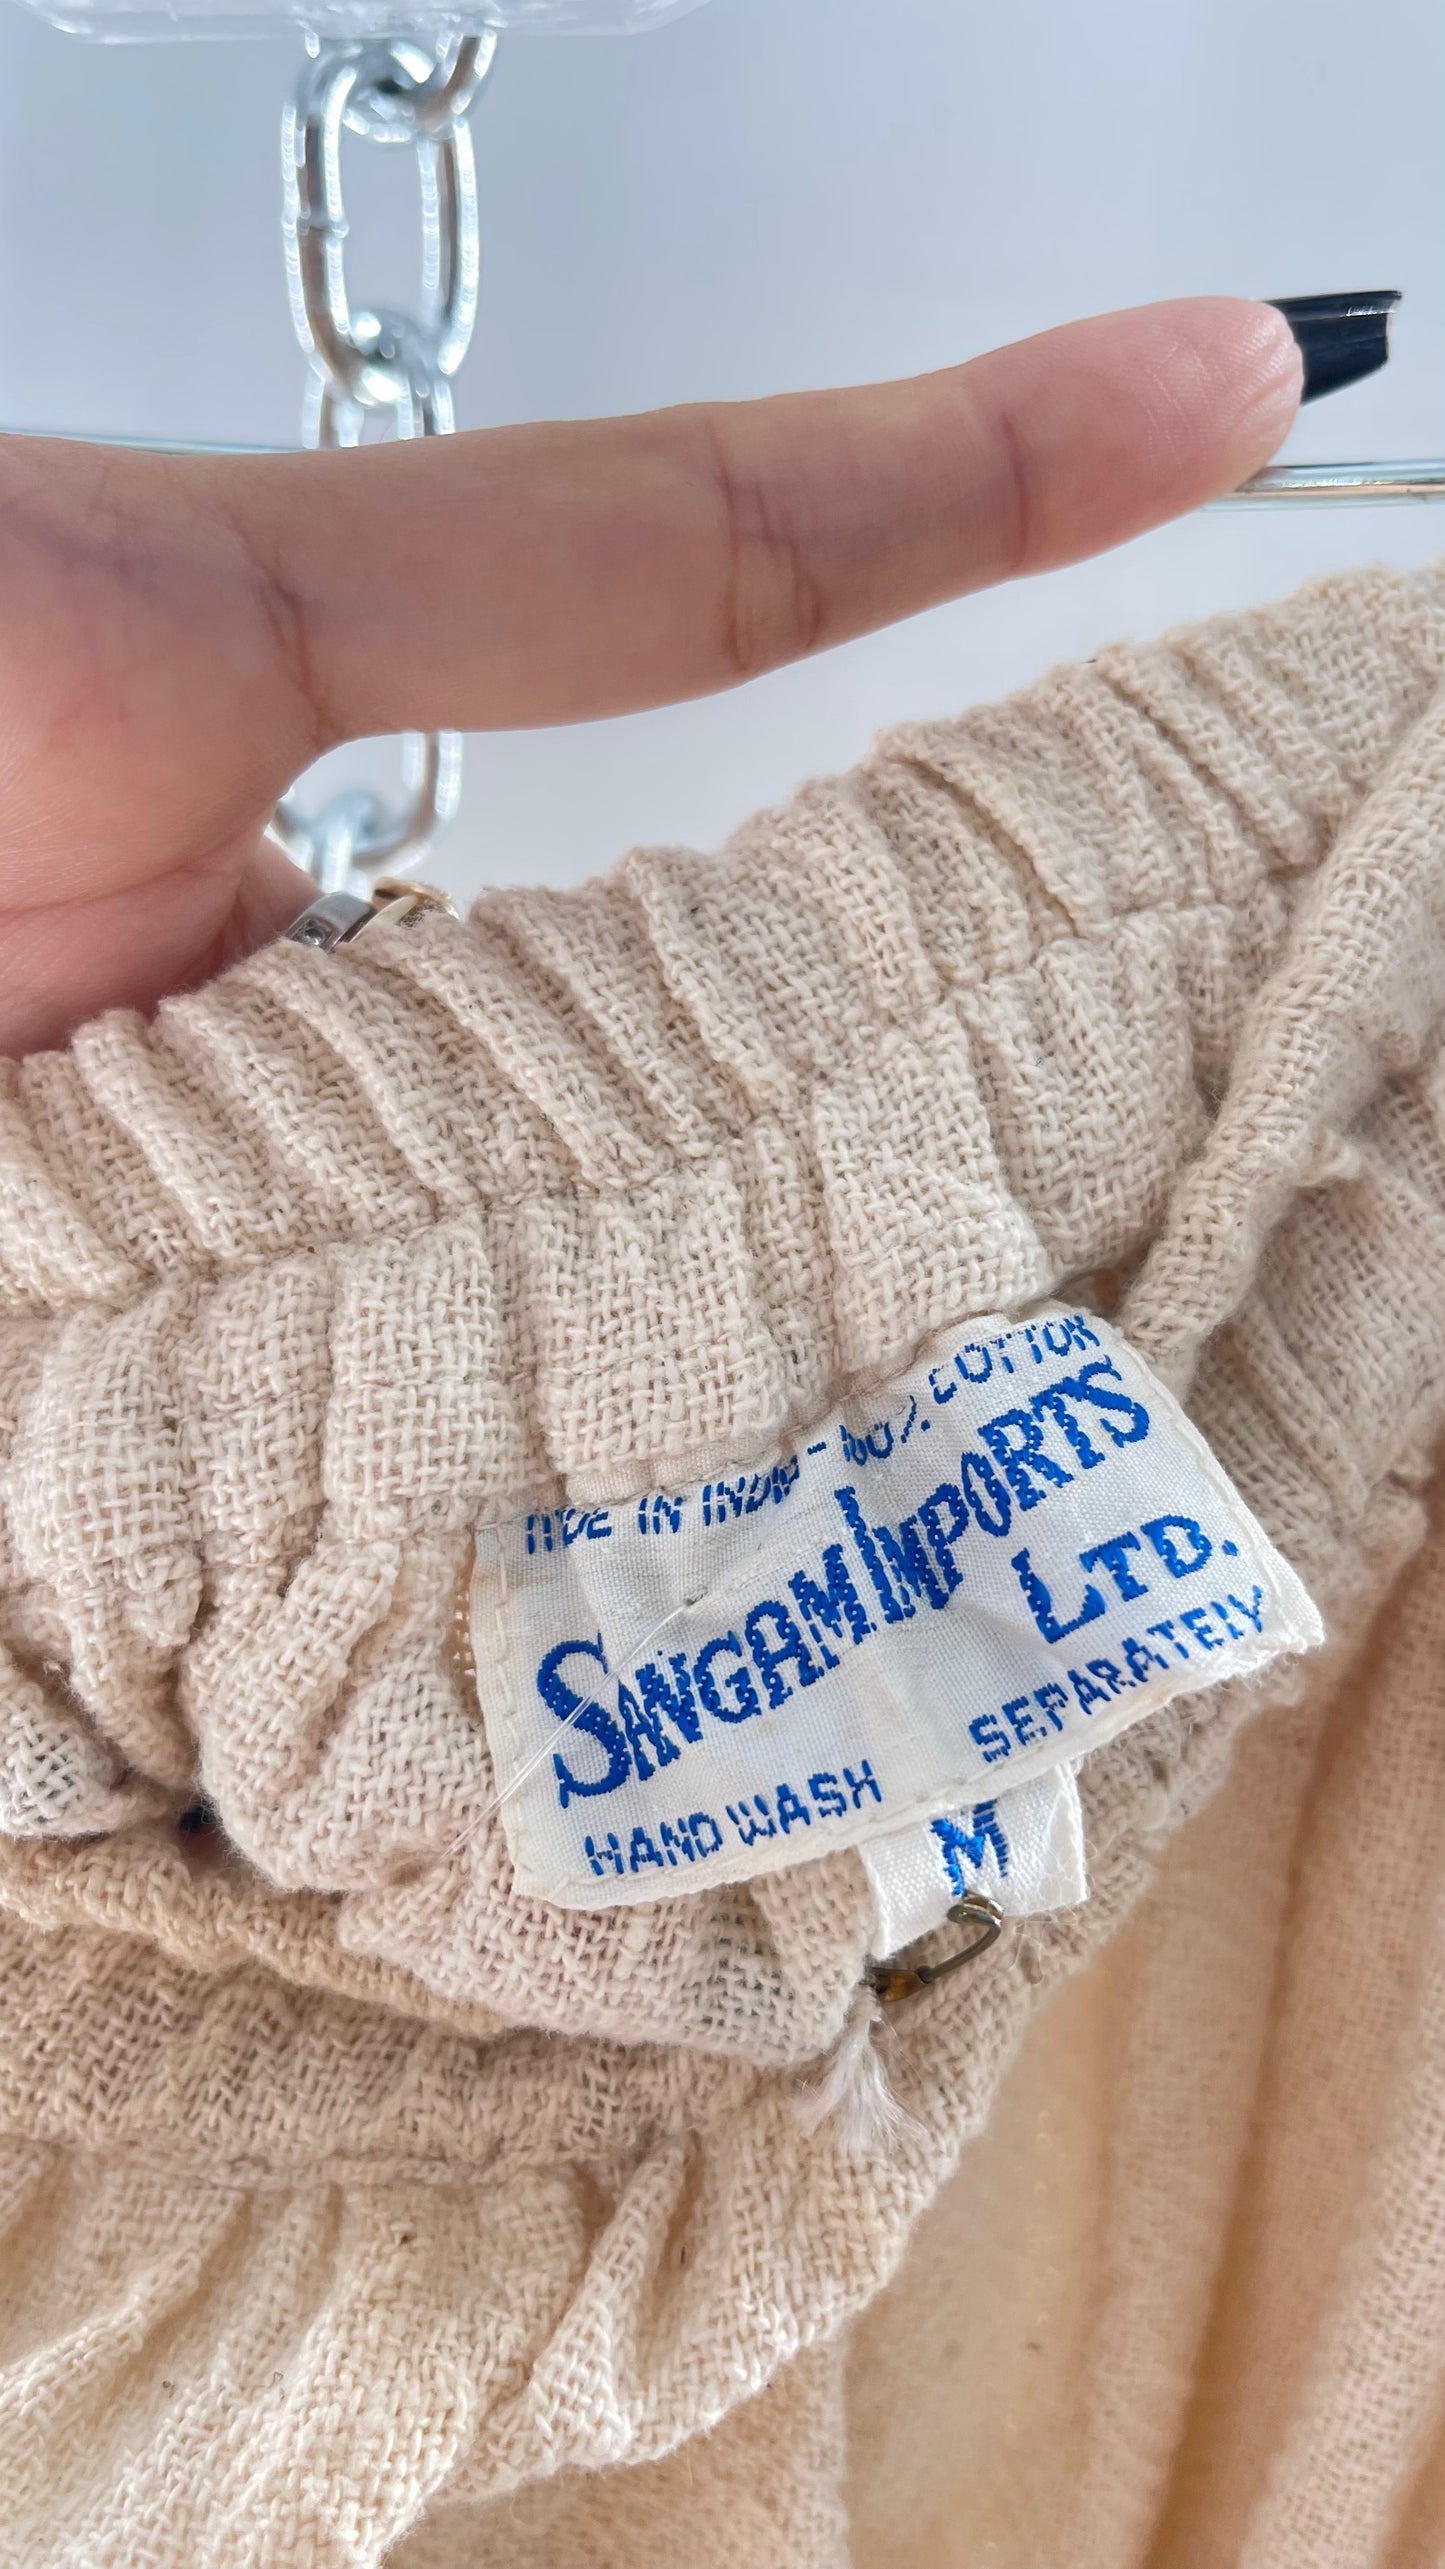 Vintage 1970s SANGAM Imports 100% Cotton White Maxi Skirt Made in India (Medium)